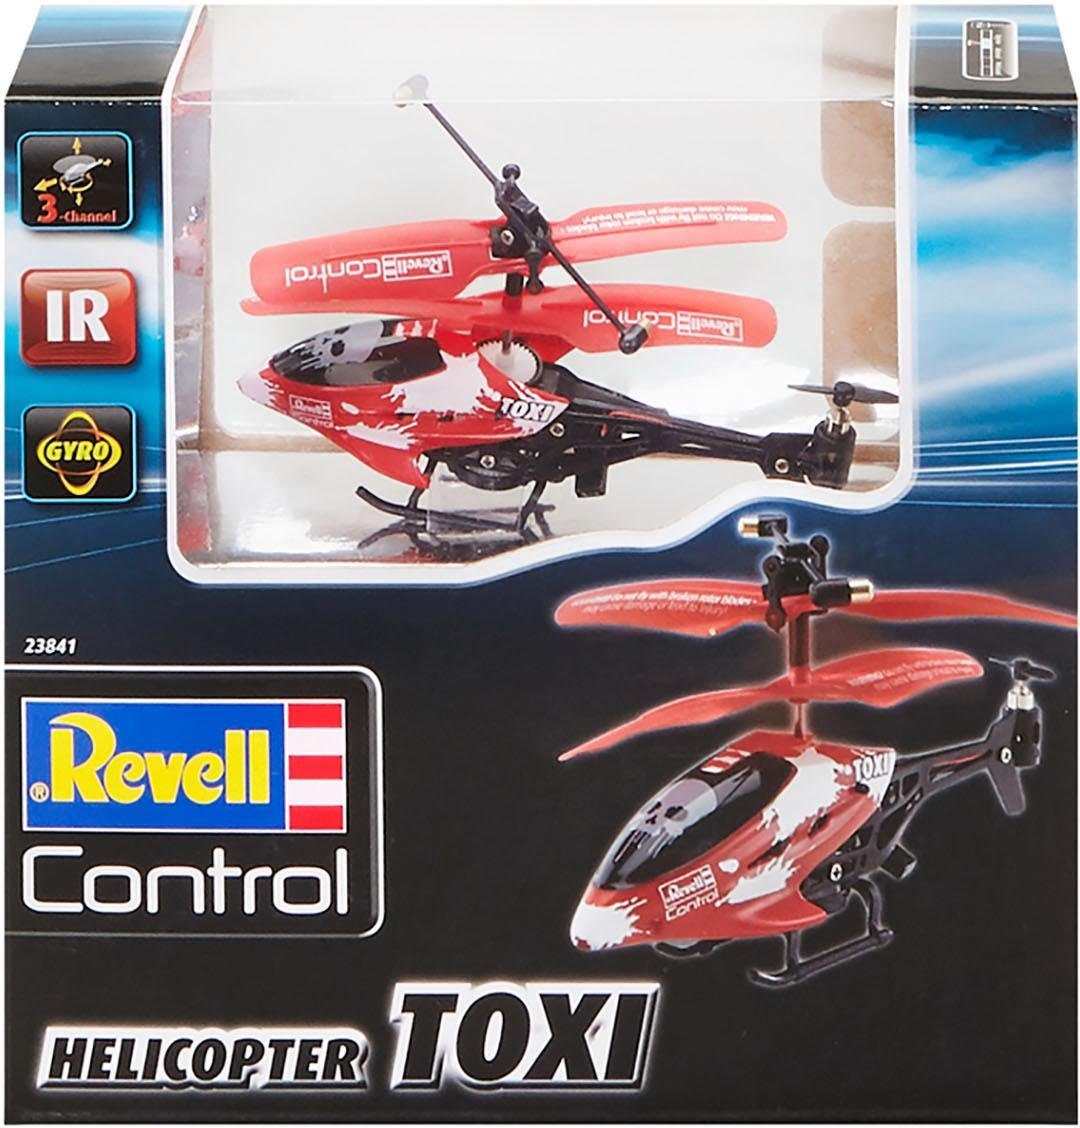 Revell Control Helicopter Glowee 2.0 ferngesteuerter Hubschrauber 3-Kanal-GHz